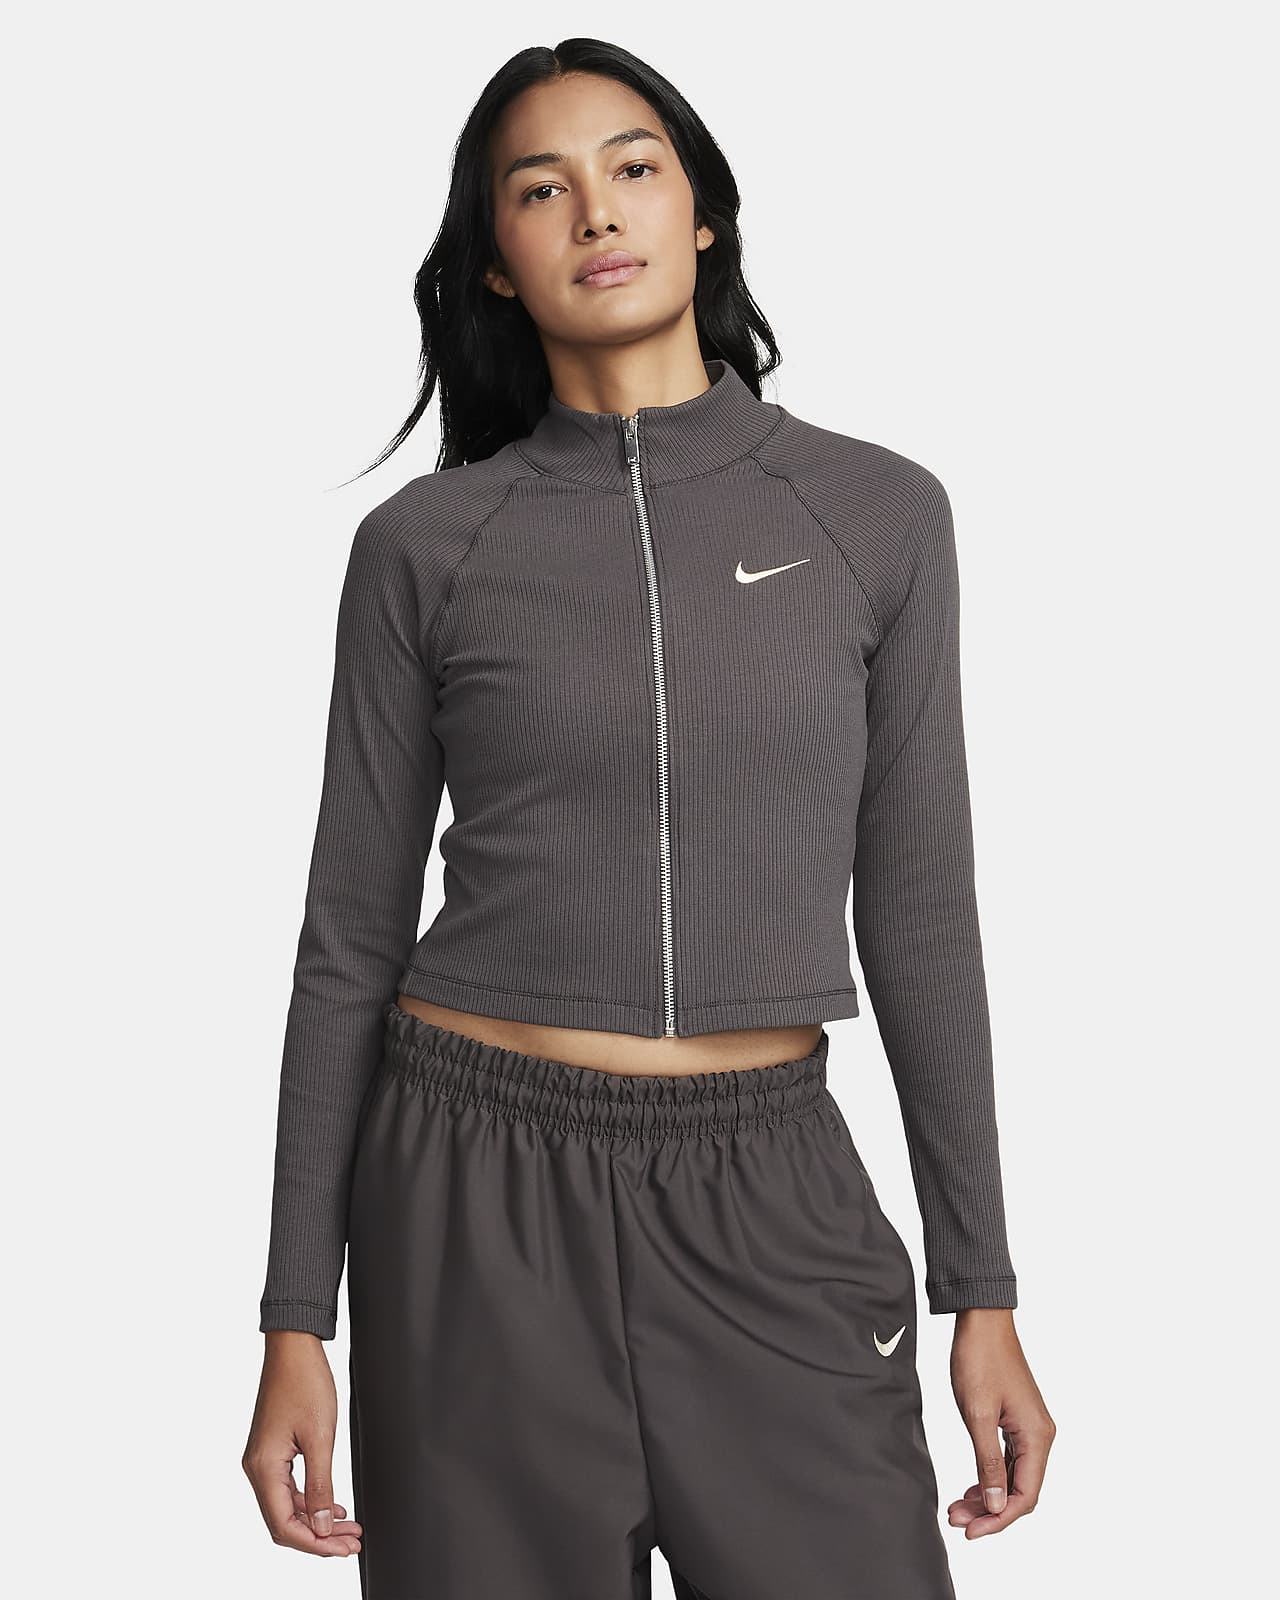 Nike Sportswear Womens Woven Jacket Black White Stripe Plus Size